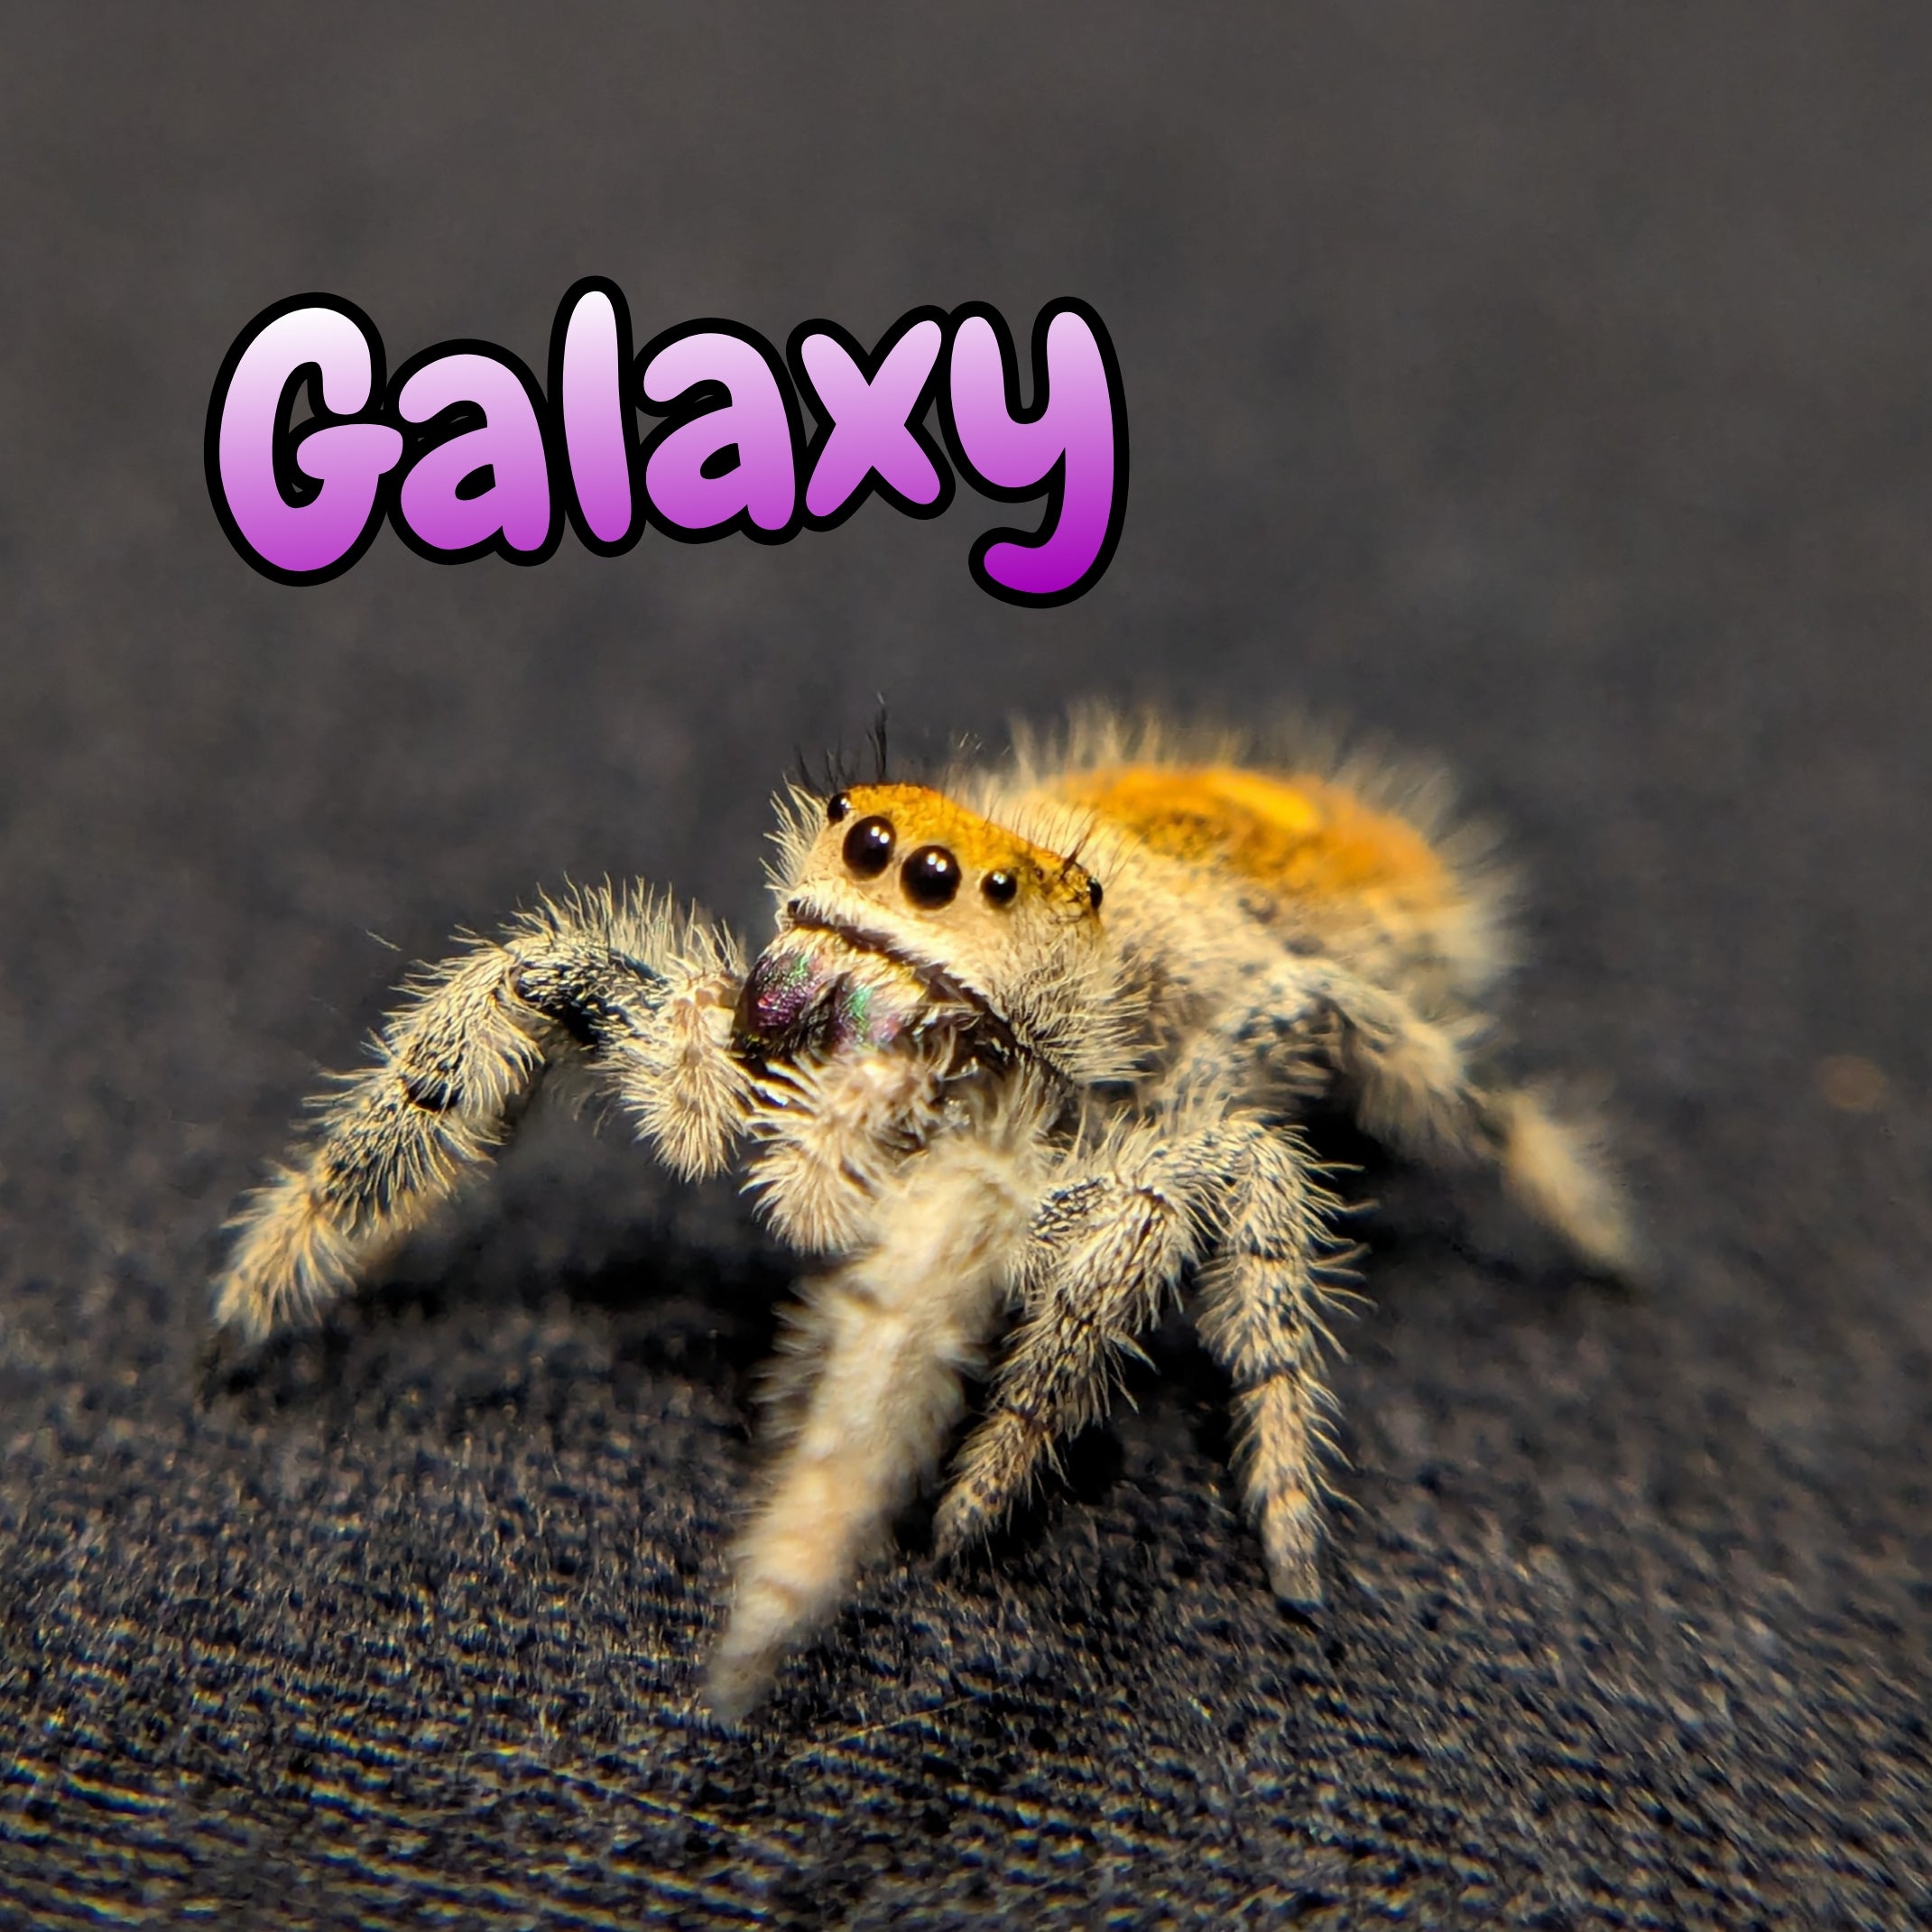 Regal Jumping Spider "Galaxy"